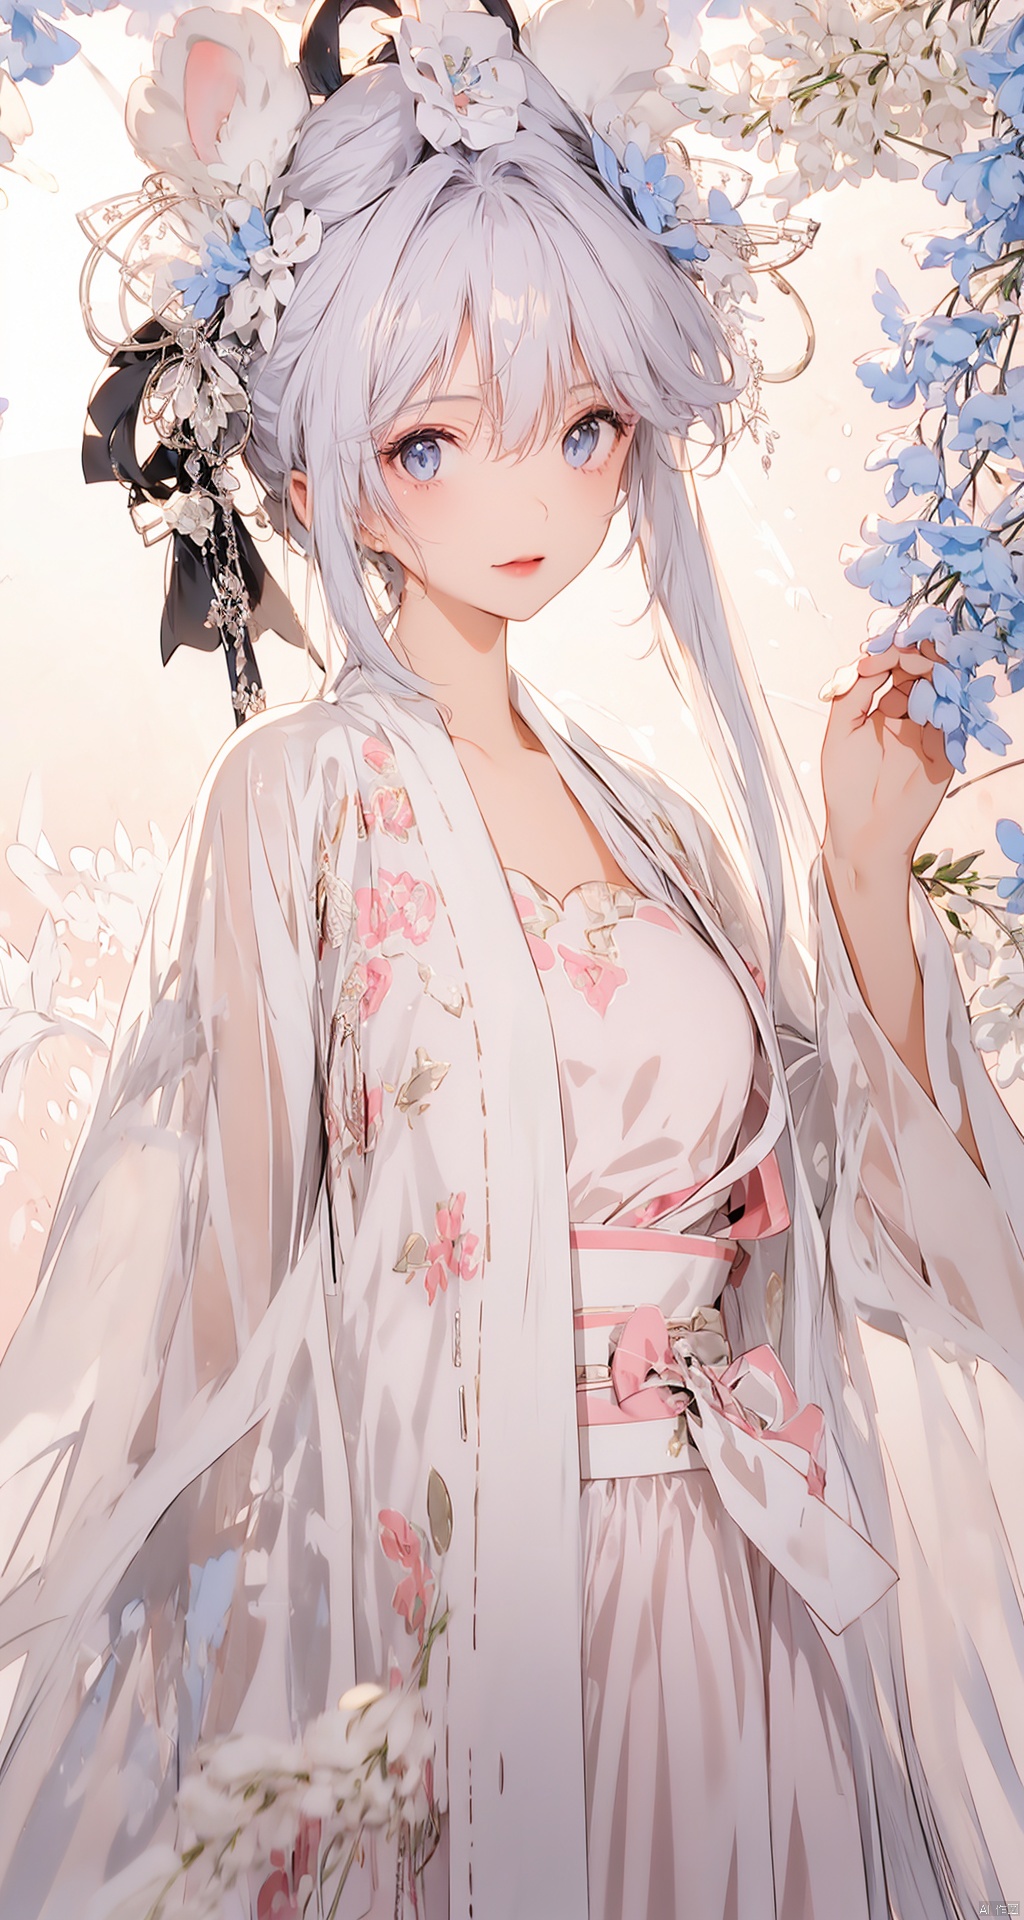  1 girl, white Hanfu, rapeseed flower field, perfect face, walking, 7-point lens, clear portrait, high-definition, 8k, high-resolution, hanfu, 1girl